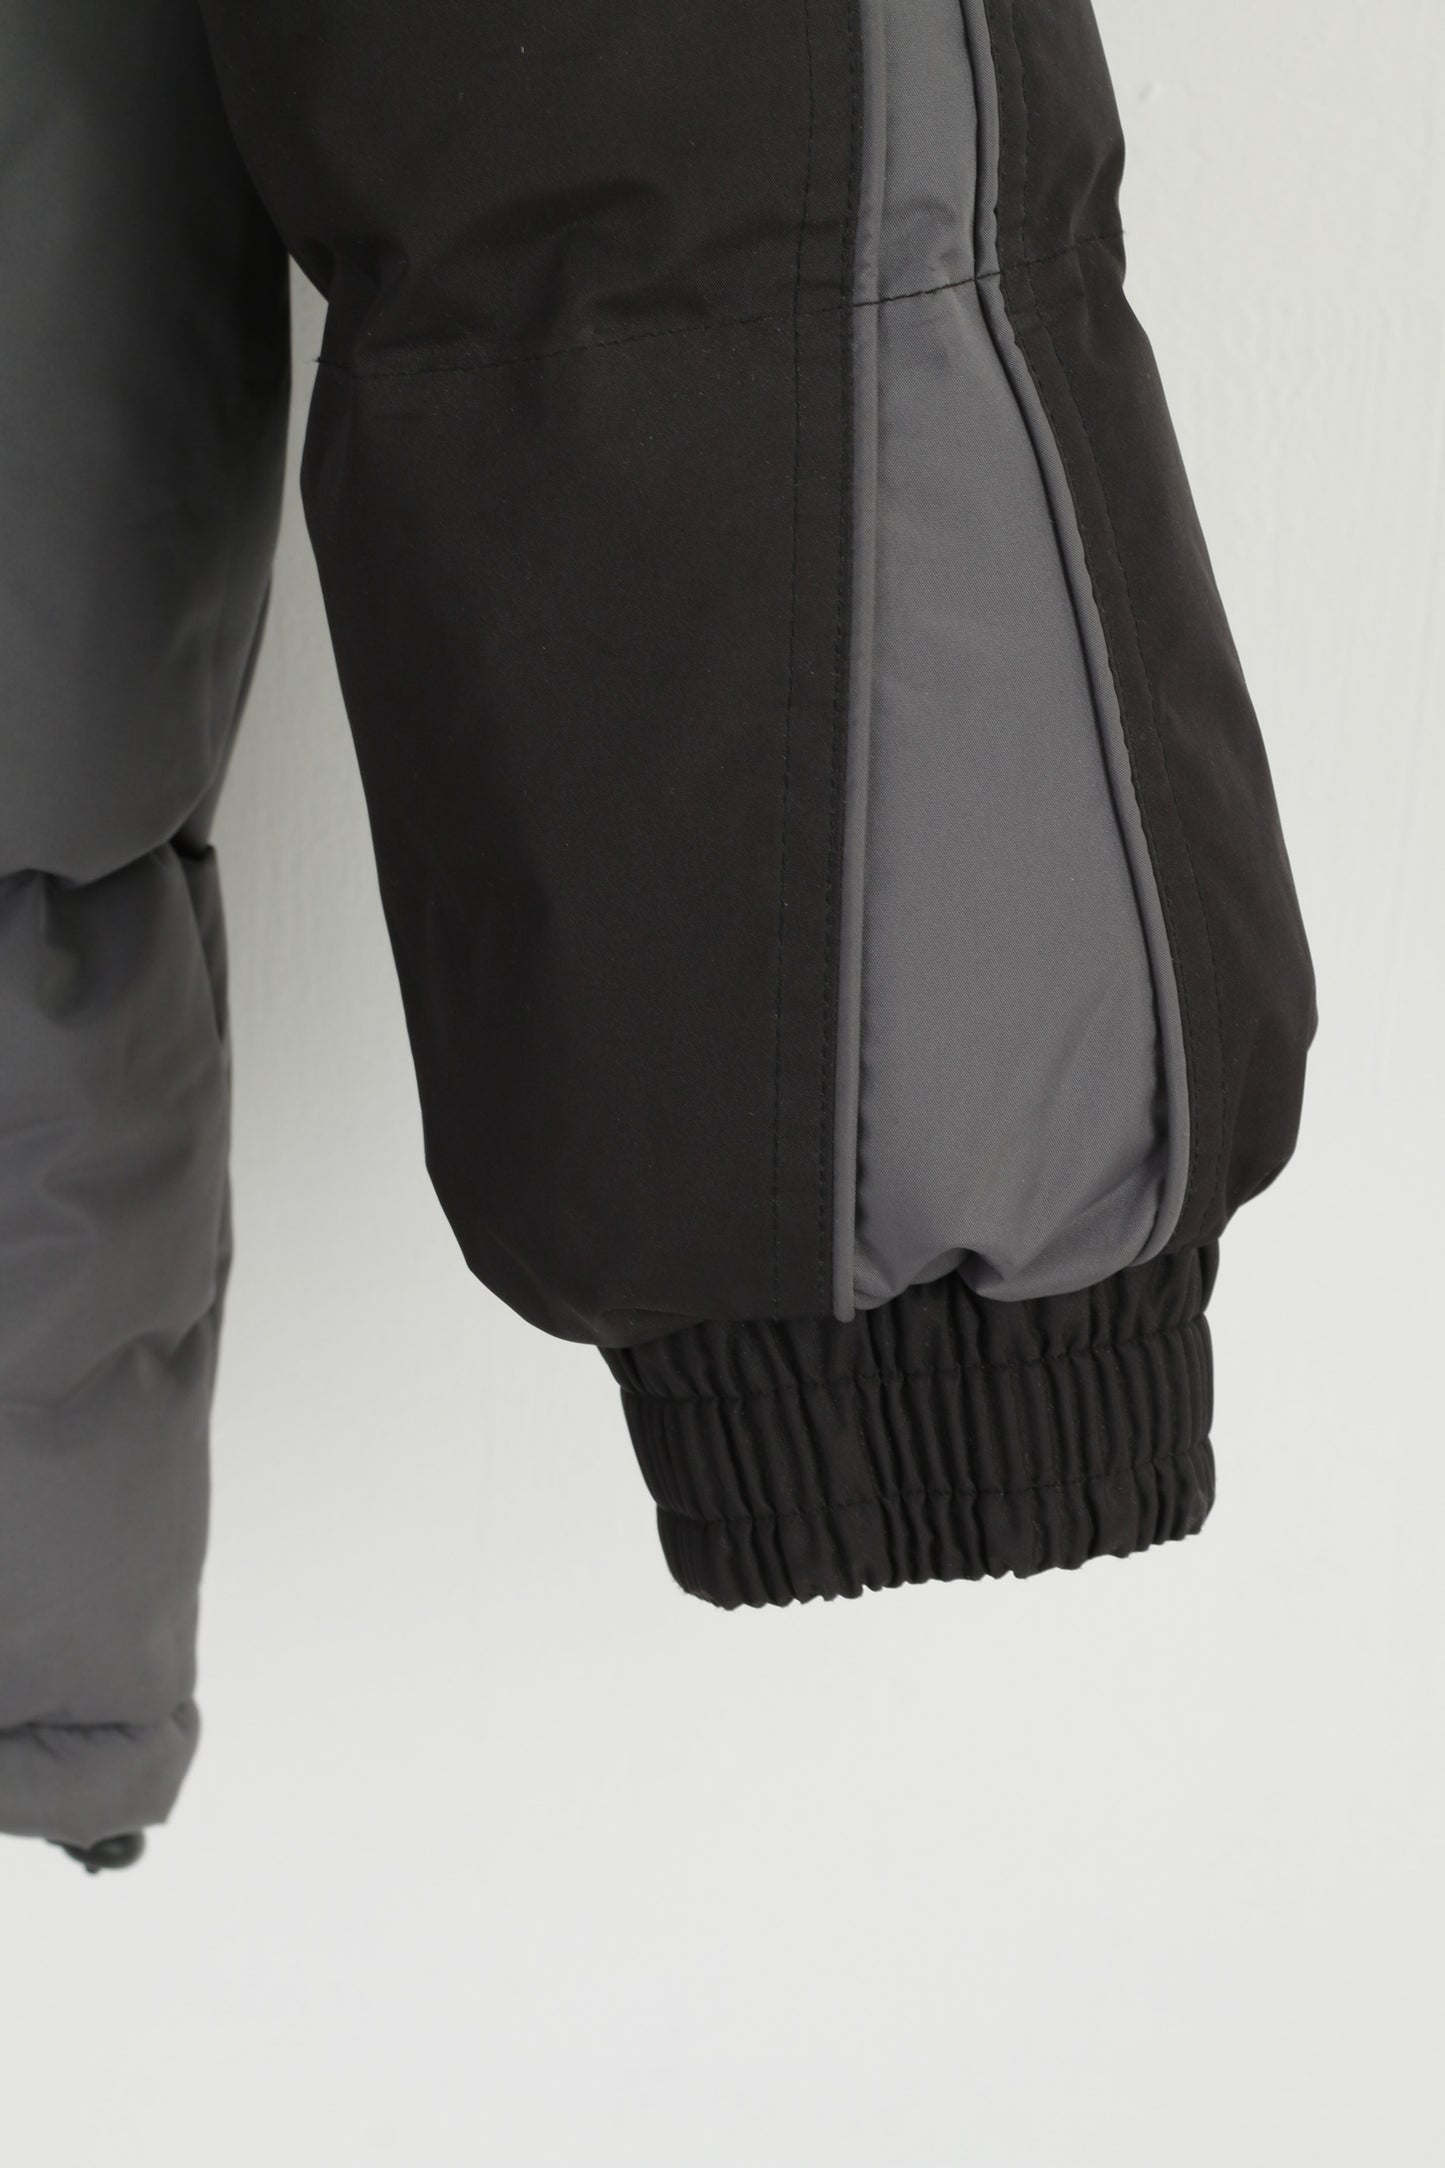 Petroff Sport Men 2XL Puffer Jacket Black Full Zipper Heavy Hooded Winter Coat